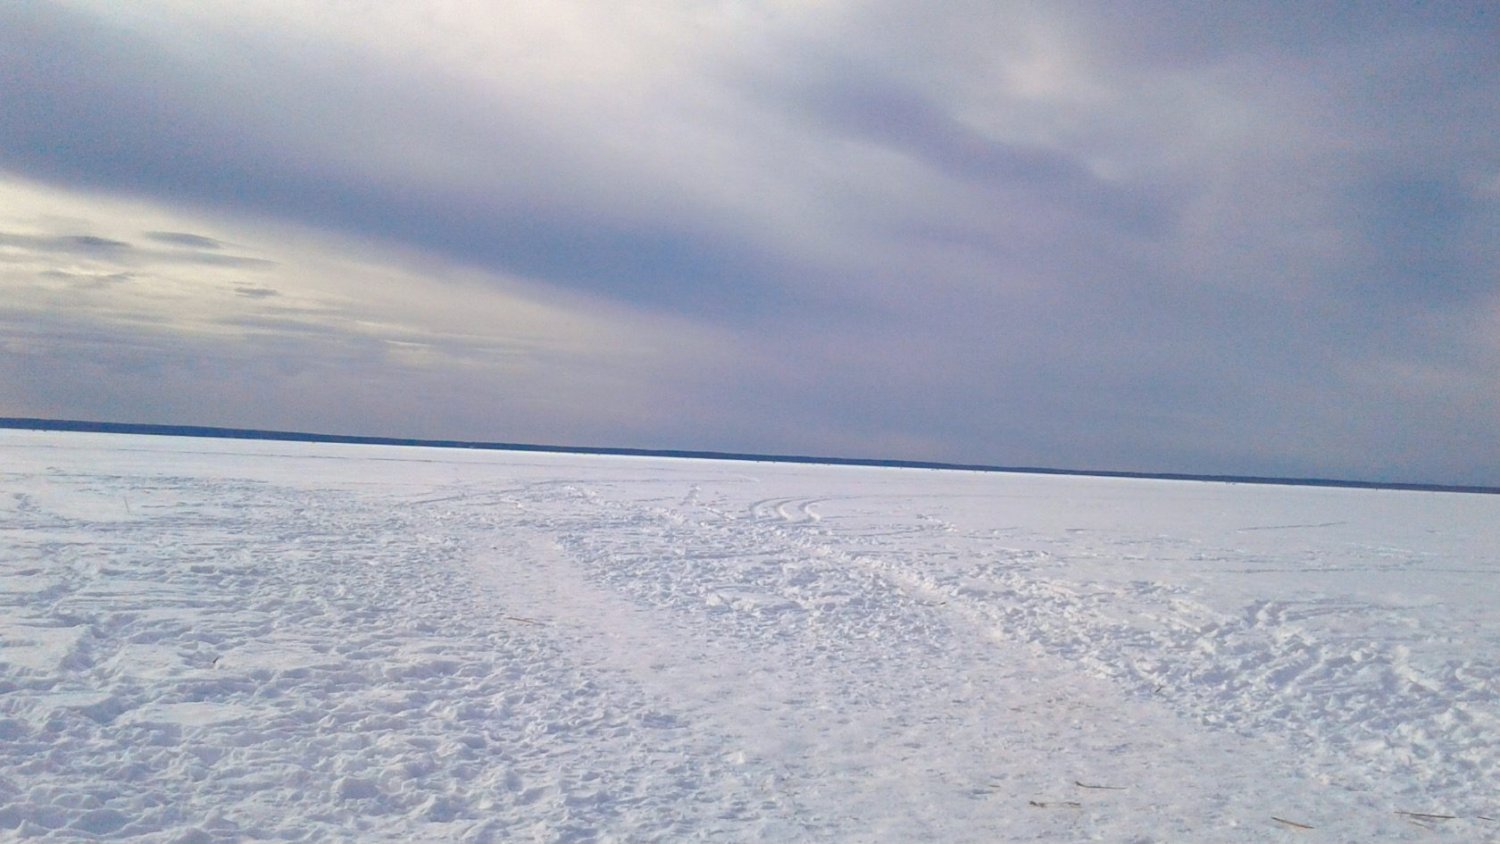 Зима плещеева. Переславль-Залесский Плещеево озеро зима. Плещеево озеро зимой. Национальный парк Плещеево озеро зимой. Плещеево озеро Переславль Залесский зимой.